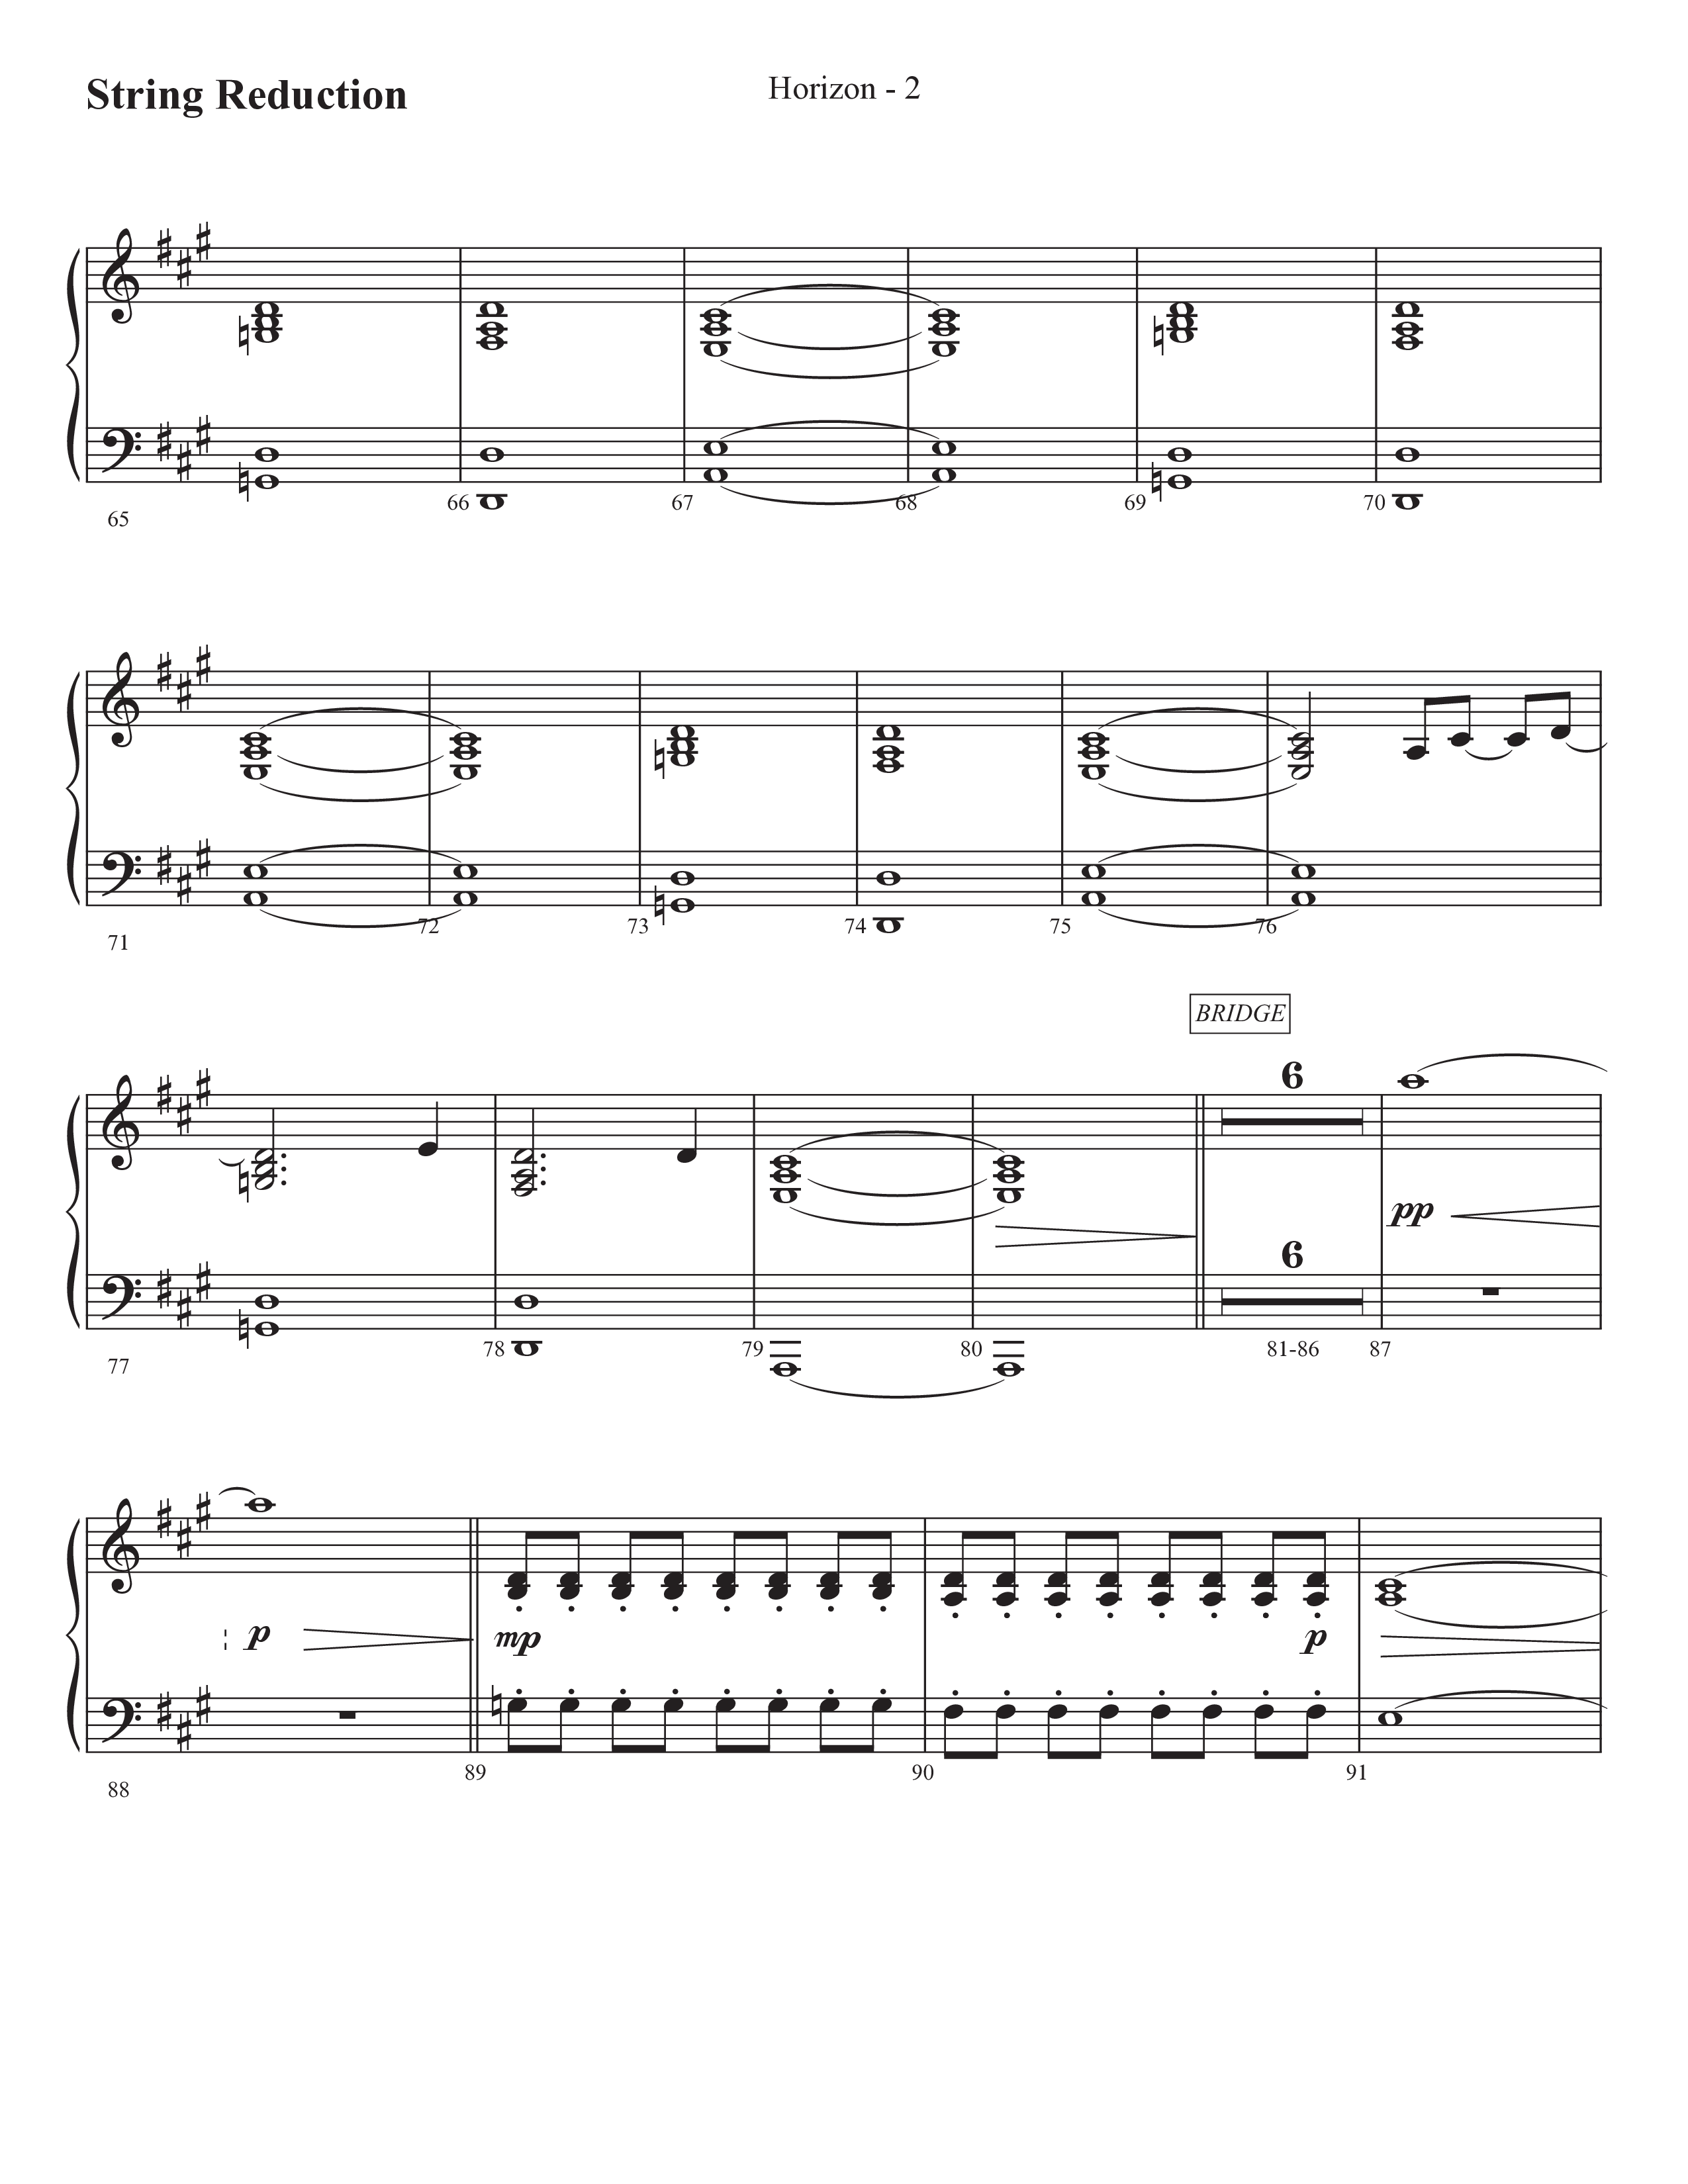 Horizon (Choral Anthem SATB) String Reduction (Prestonwood Worship / Prestonwood Choir / Michael Neale / Orch. Jonathan Walker)